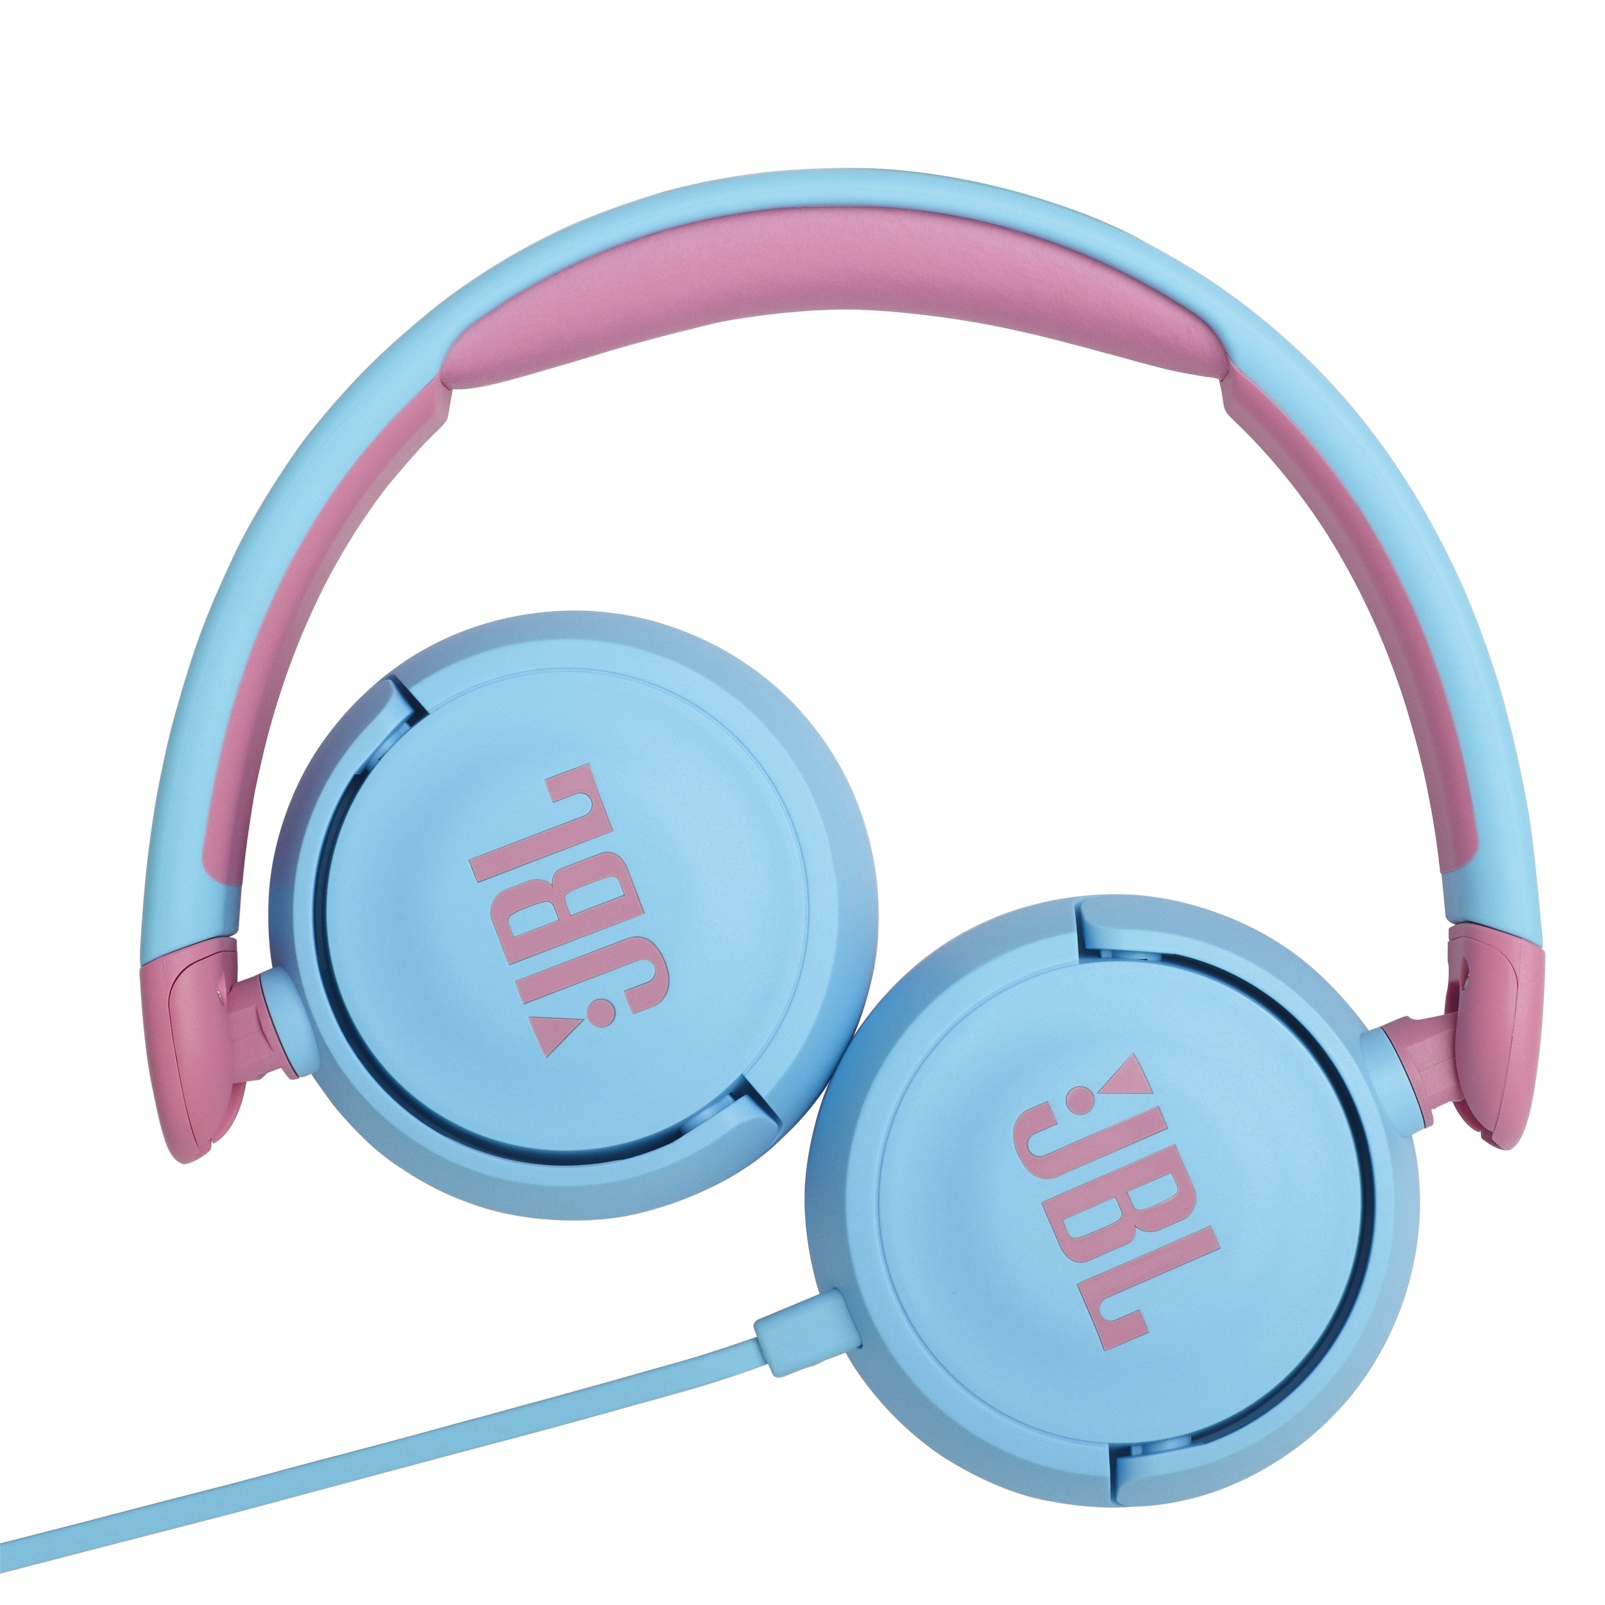 NEU VERSIEGELT JBL Harman JR 310 Kinder On-Ear Wired Headphones Pink und Blau 